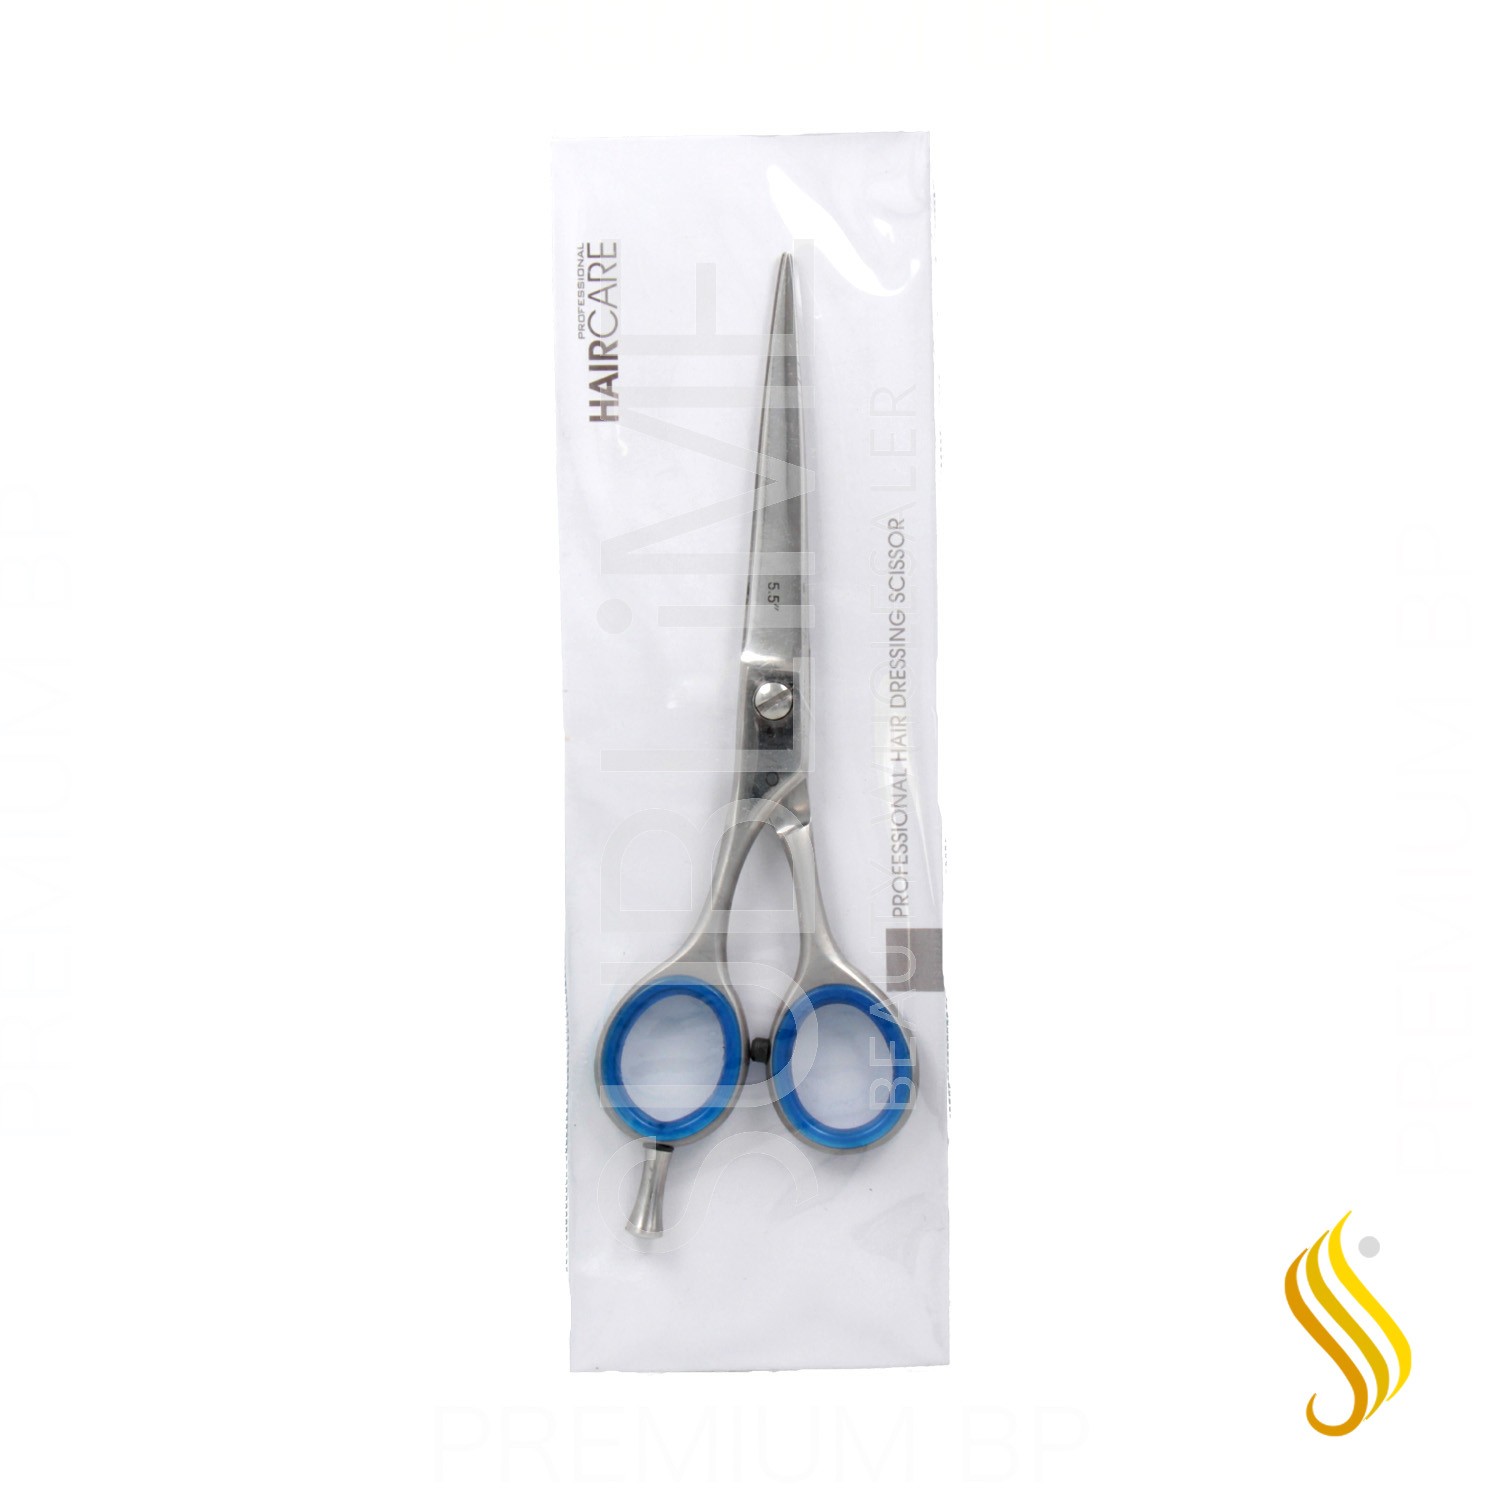 Xanitalia Professional Scissor Cut Stylo 5.5" Gaucher